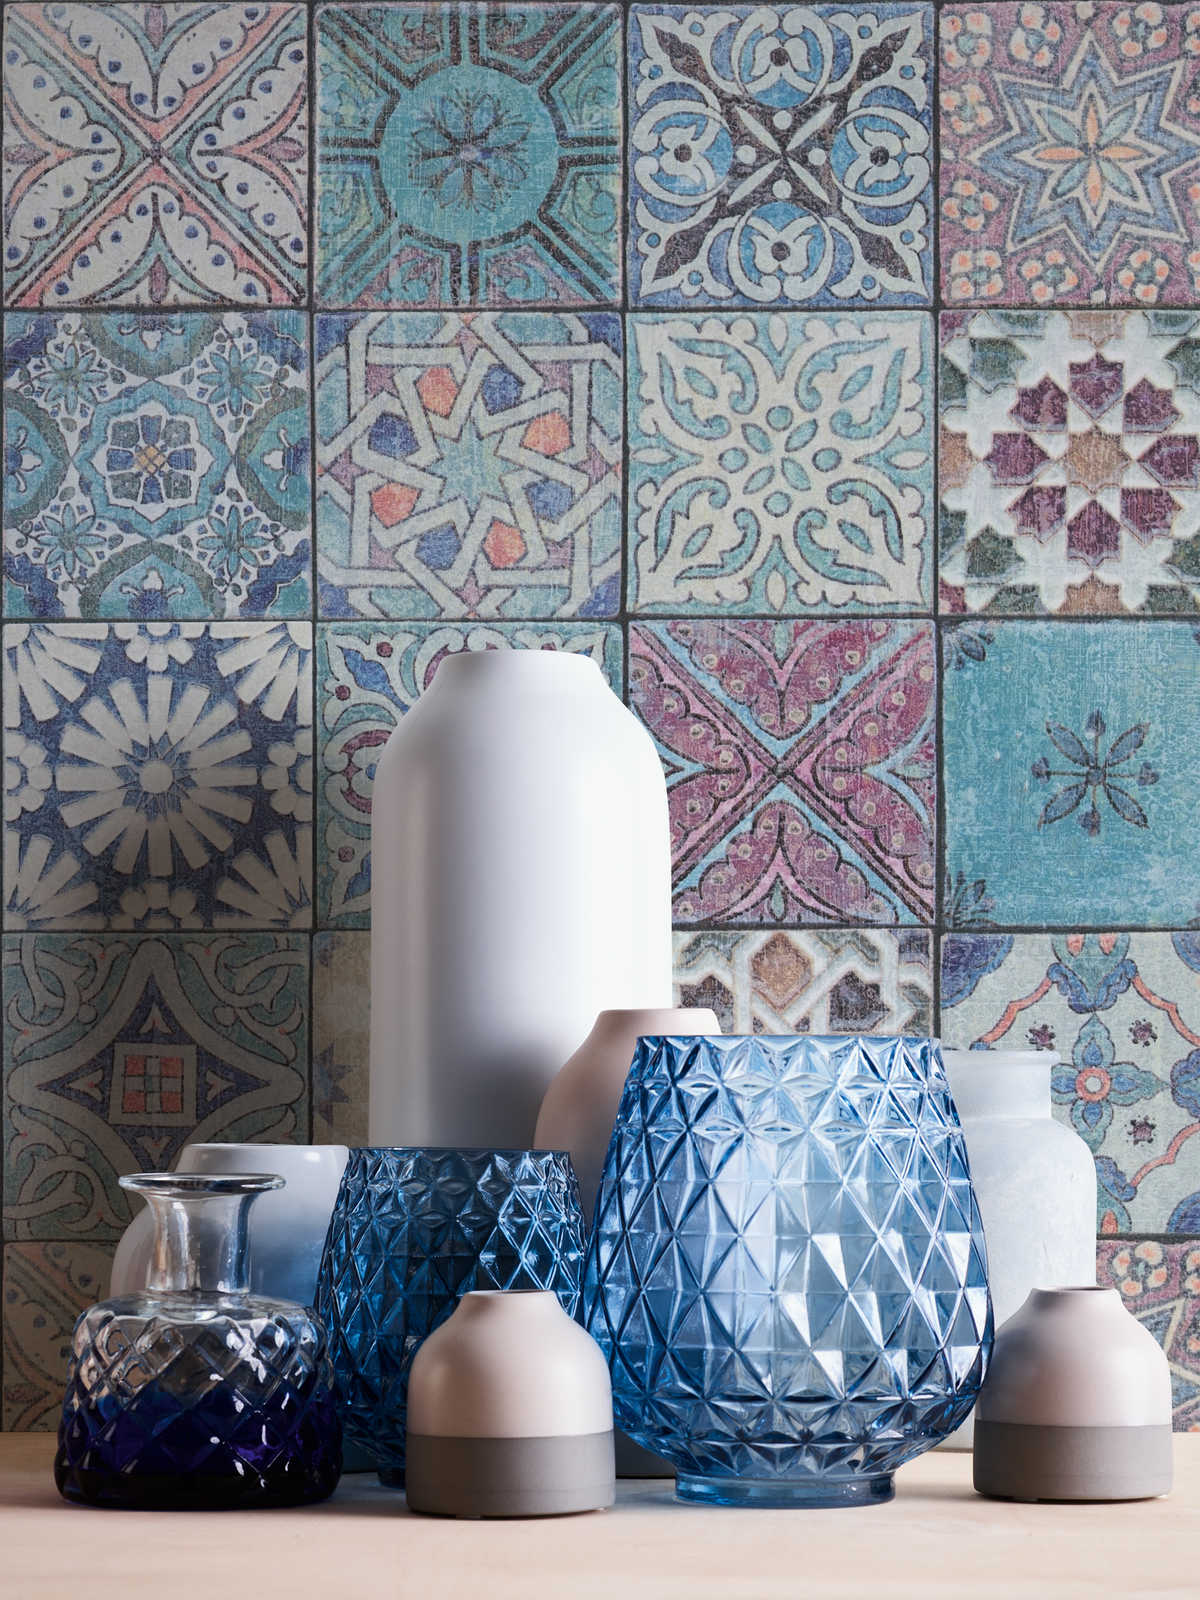             Self-adhesive tile wallpaper vintage mosaic pattern - colourful, blue, purple
        